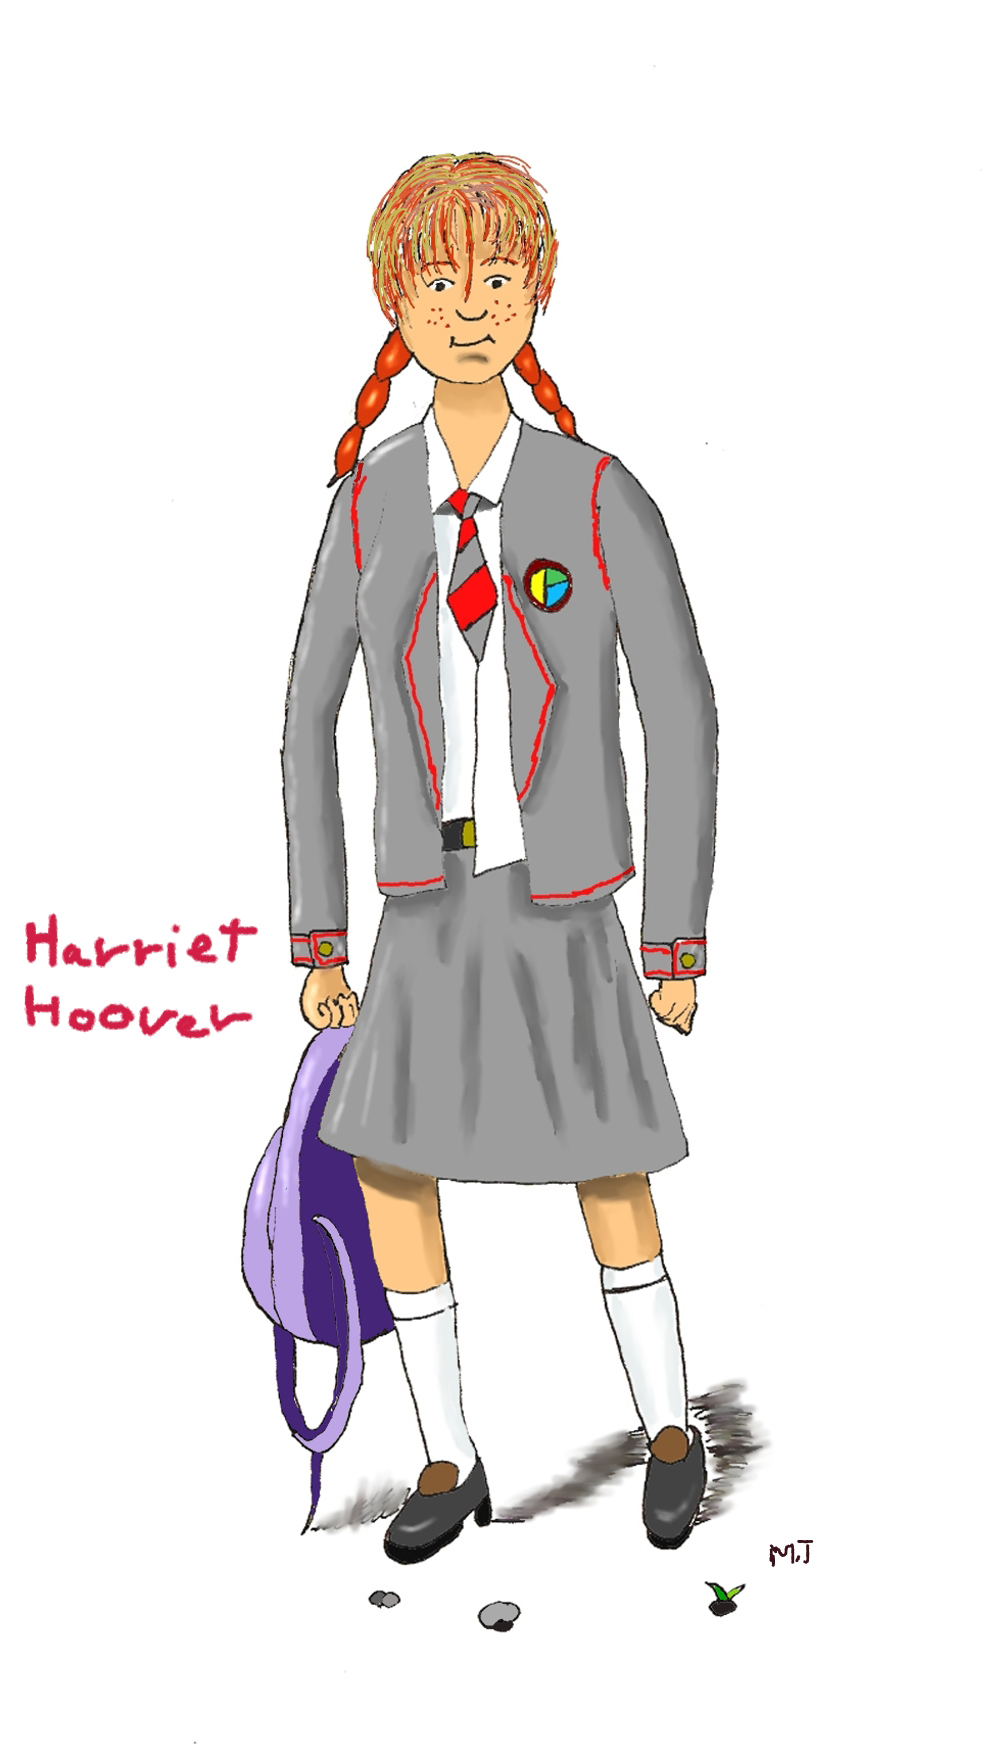 Harriet Hoover by MJWOOD